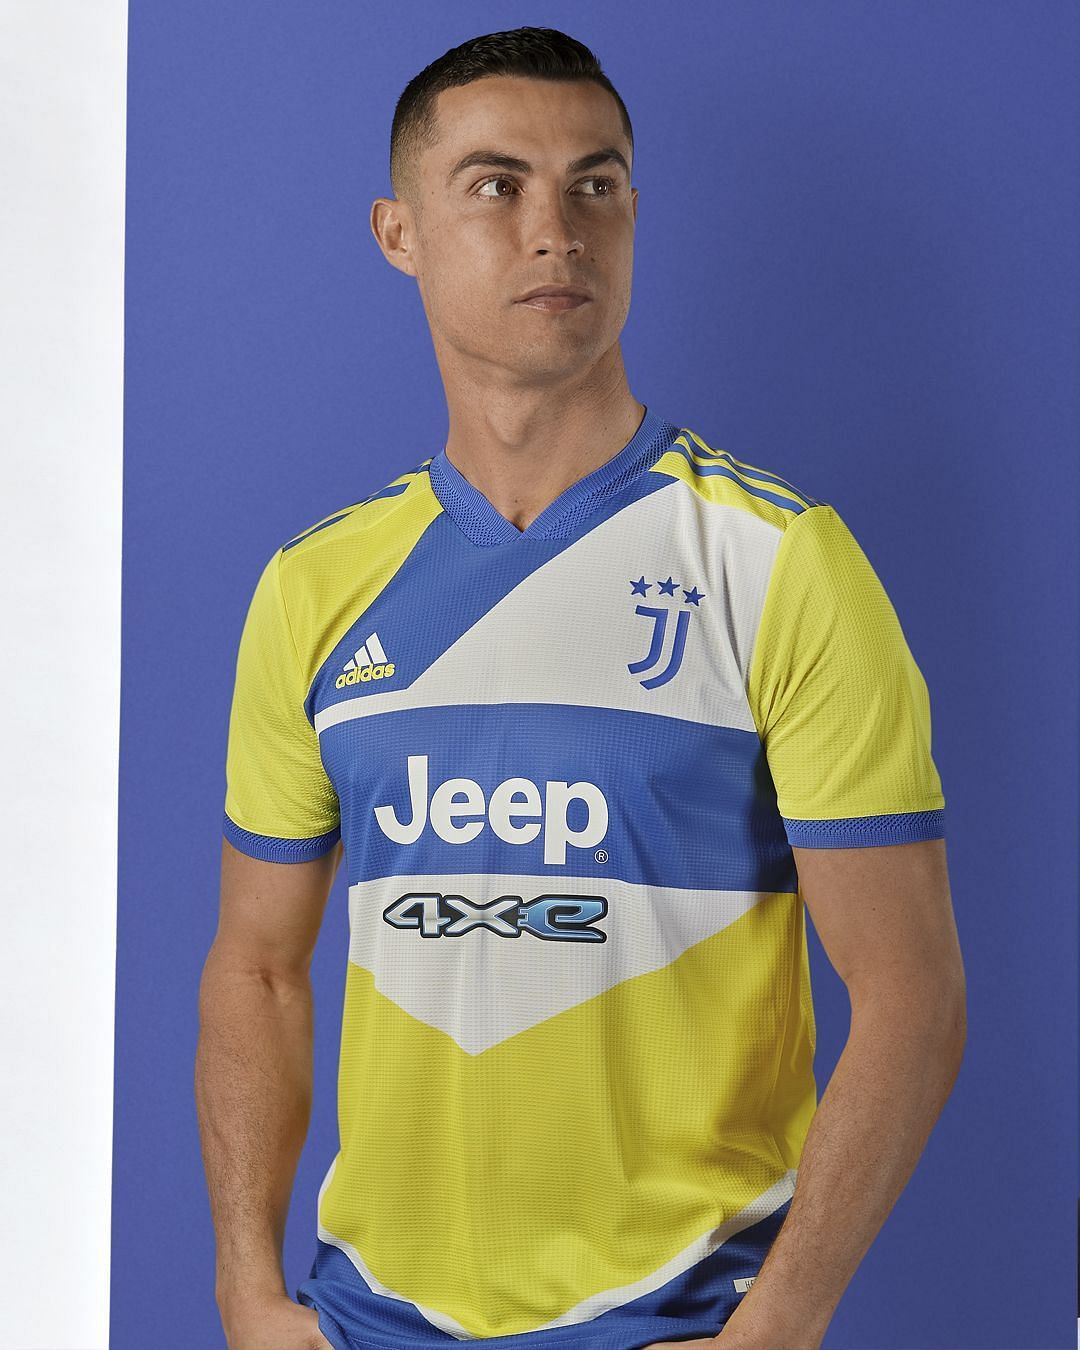 Cristiano Ronaldo posses in Juventus third kit